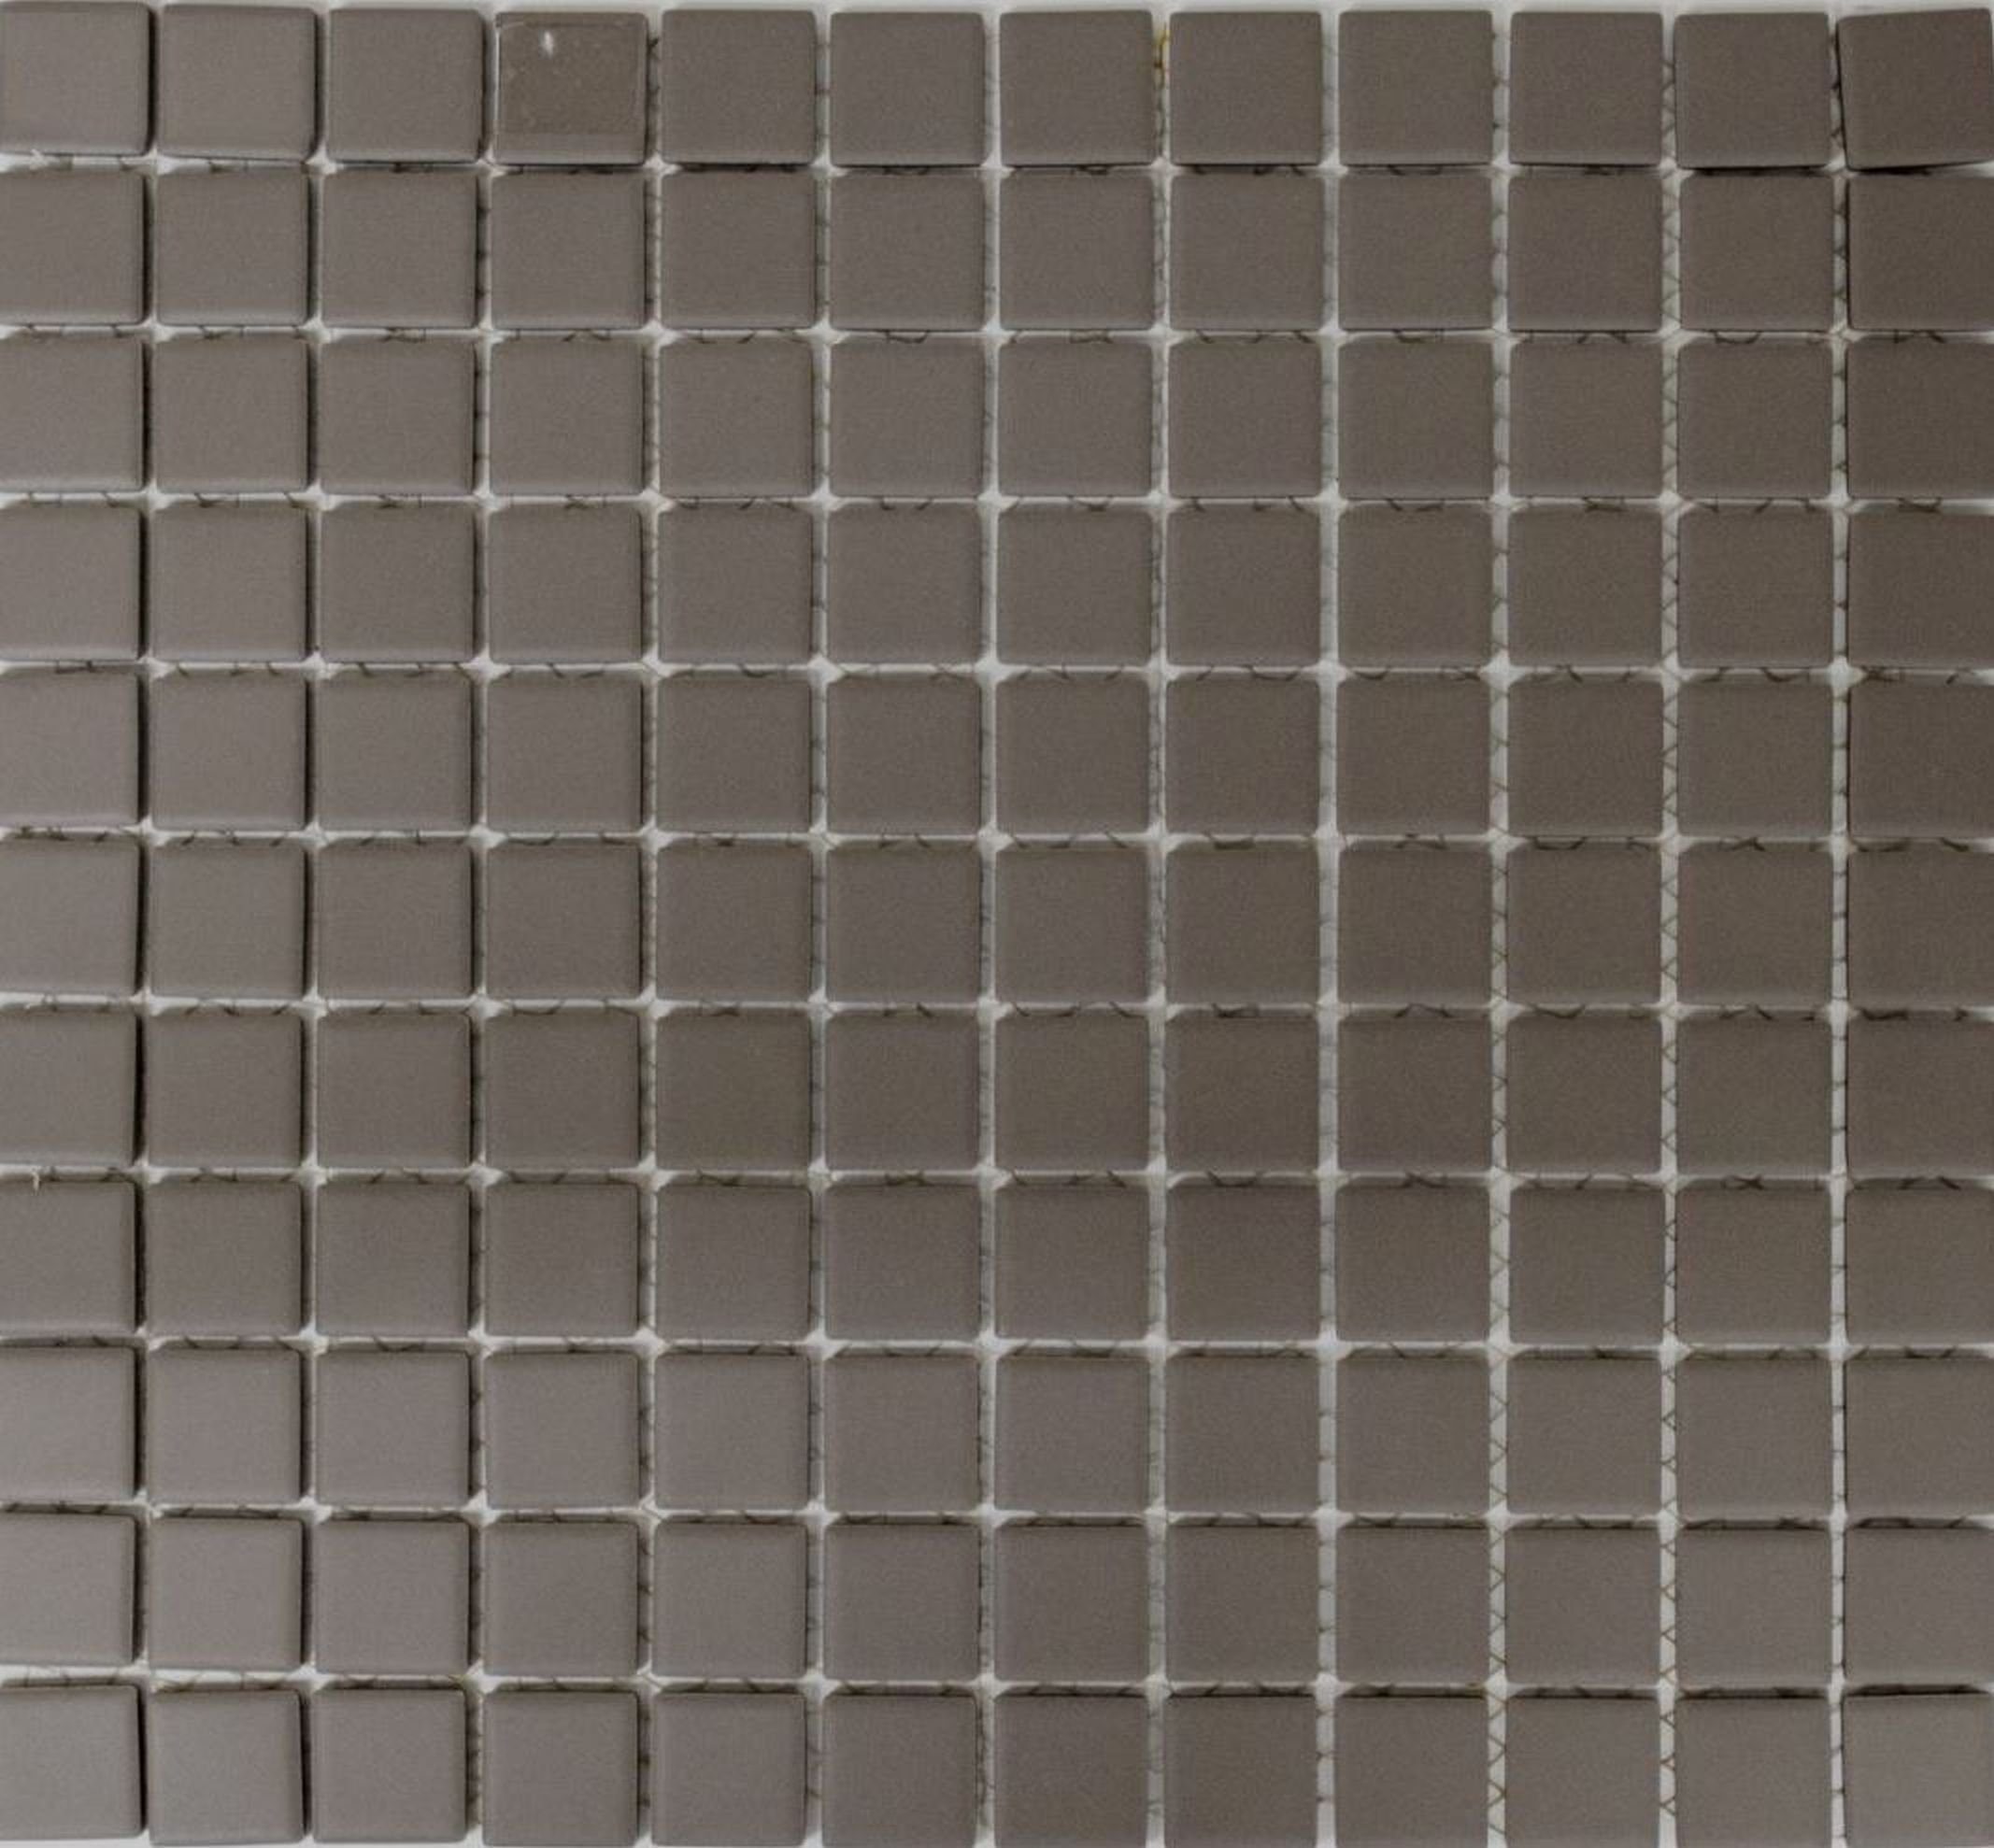 Mosani Mosaikfliesen Mosaik Fliese Keramik graubraun unglasiert rutschsicher Boden Küche